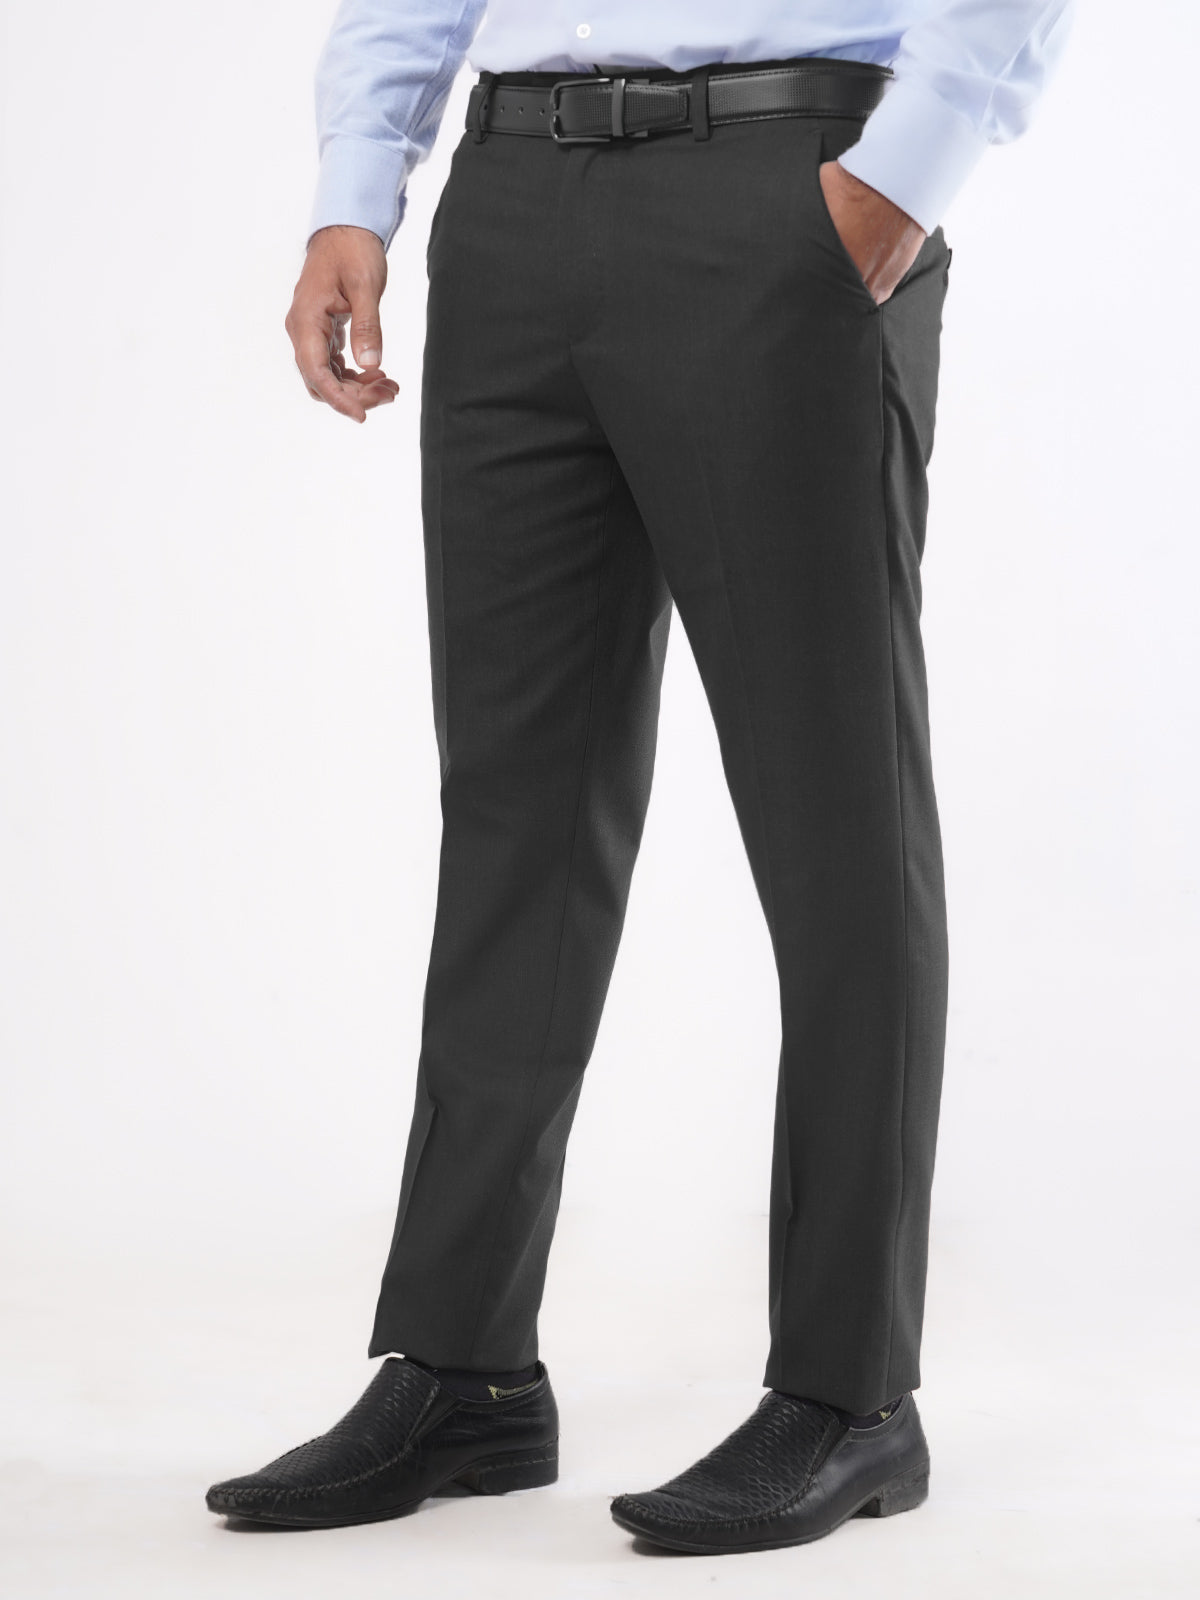 Black Plain Executive Formal Dress Trouser (FDT-130)